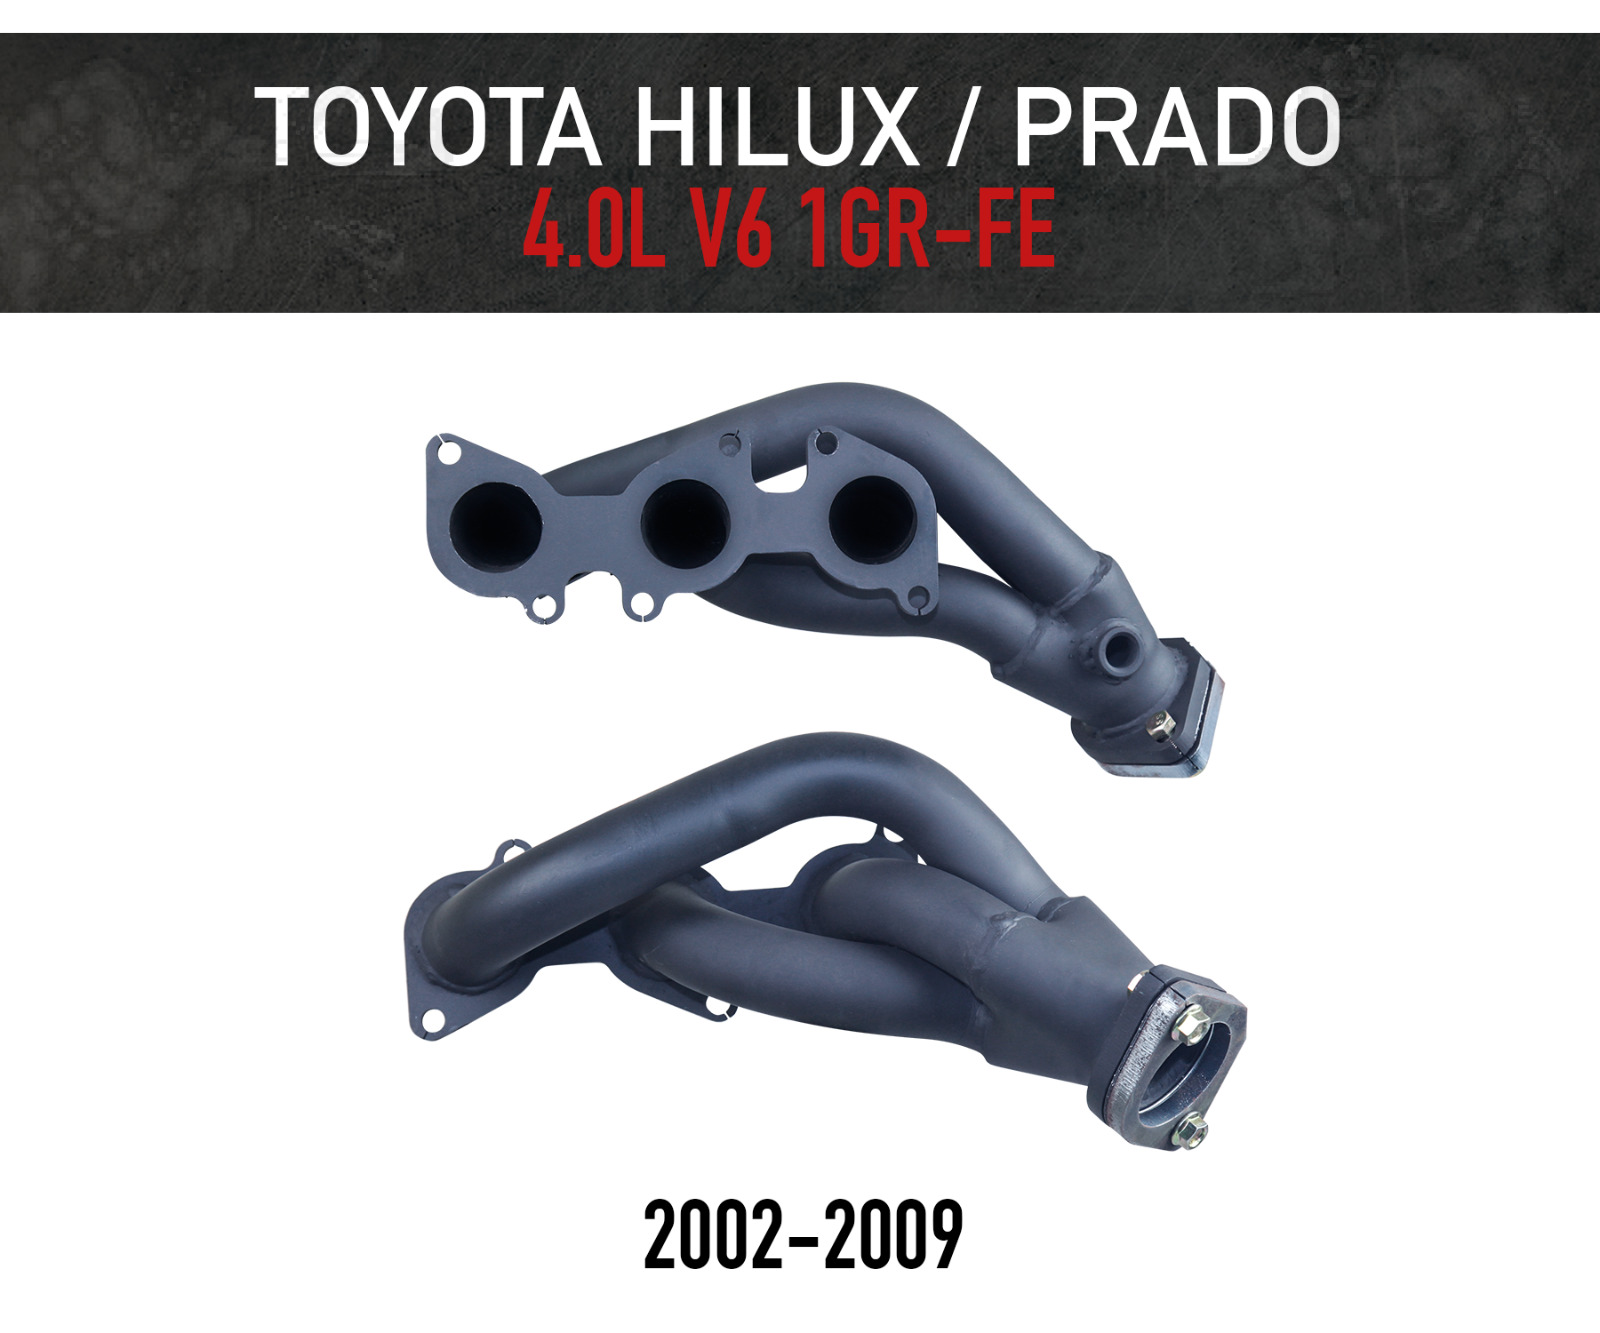 Headers / Extractors for Toyota Hilux & Prado (2002-2009) 4.0L V6 1GR-FE Motor